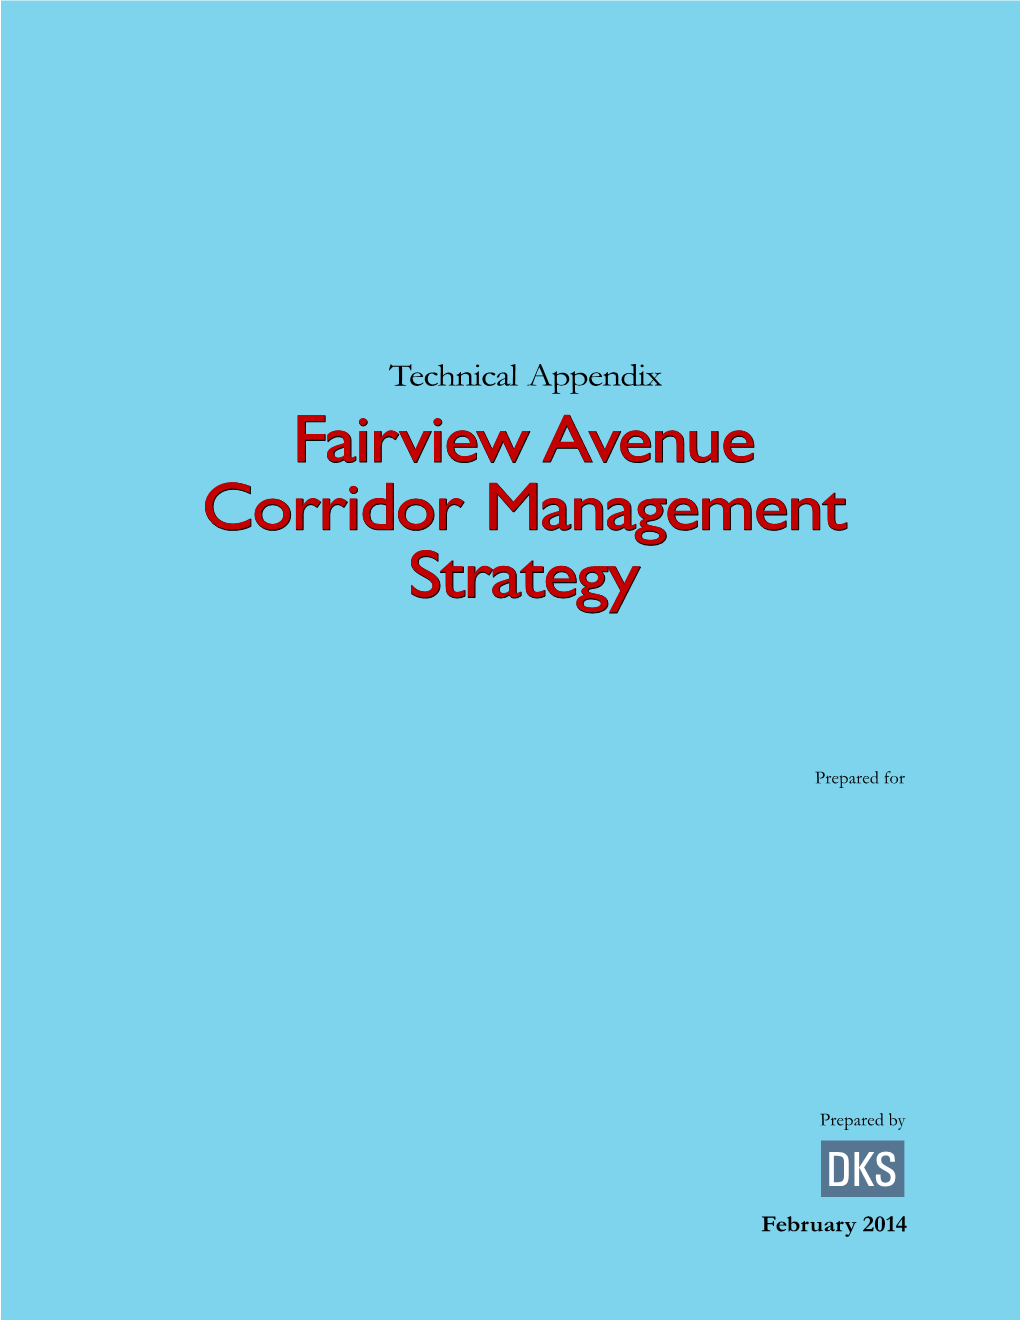 Fairview Avenue Corridor Access Management